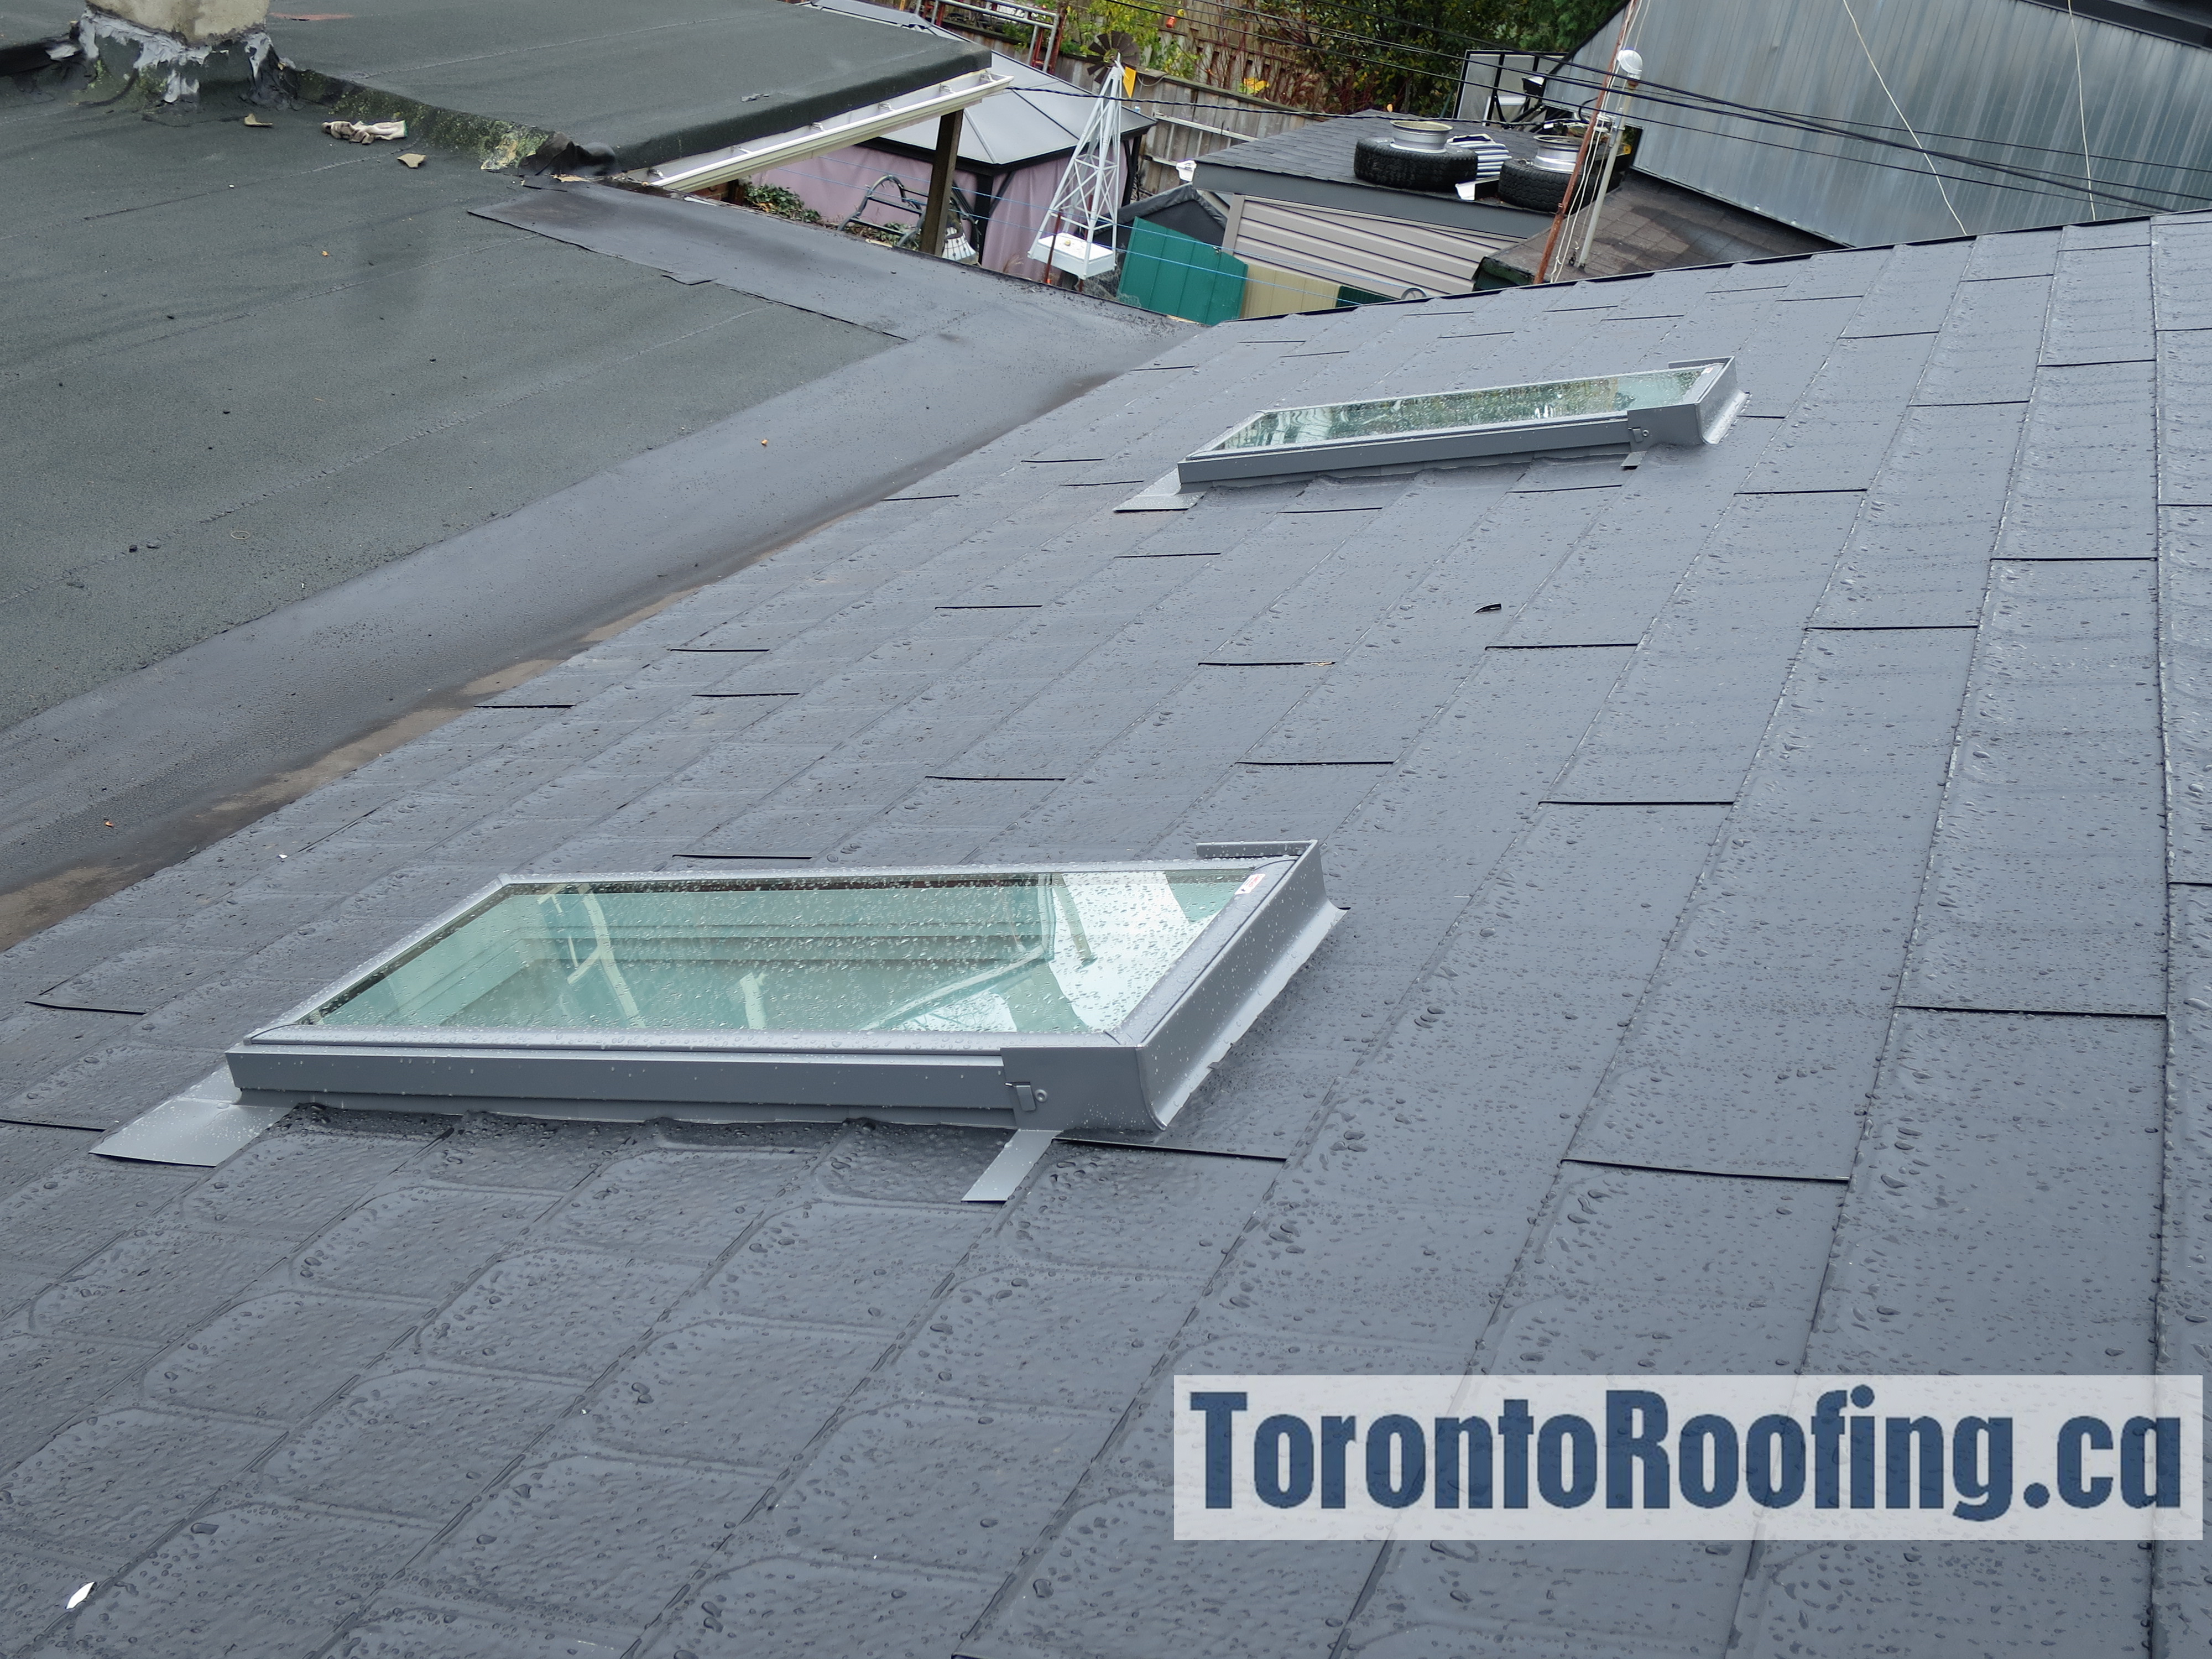 Toronto,roofing,metal,shingles,contractor,roof,installation,asphalt,shake,slate,steel,replacement